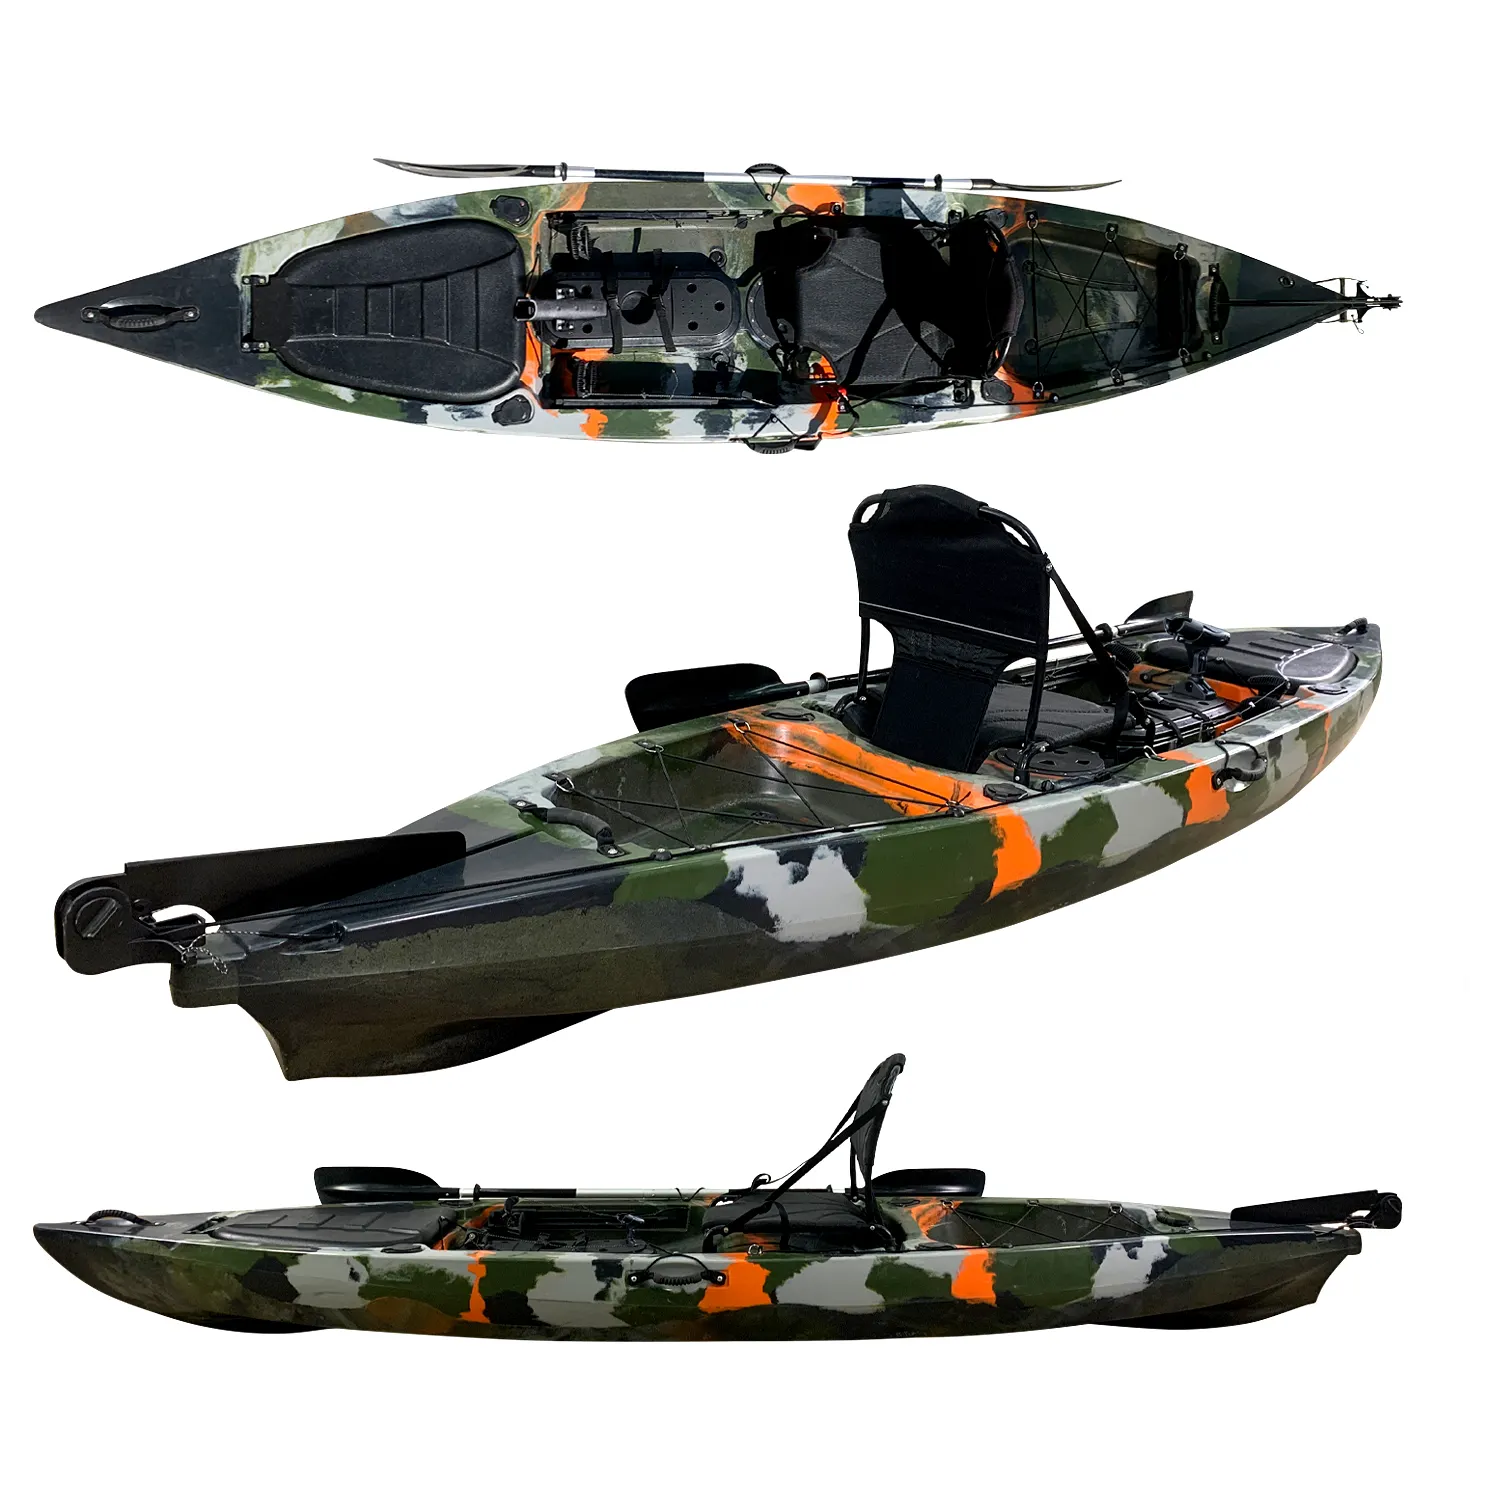 TOLEE nuovo Design singolo kayak pesca pedale canoa kayak 1 persona in vendita TOLEE marca kayak fabbricazione